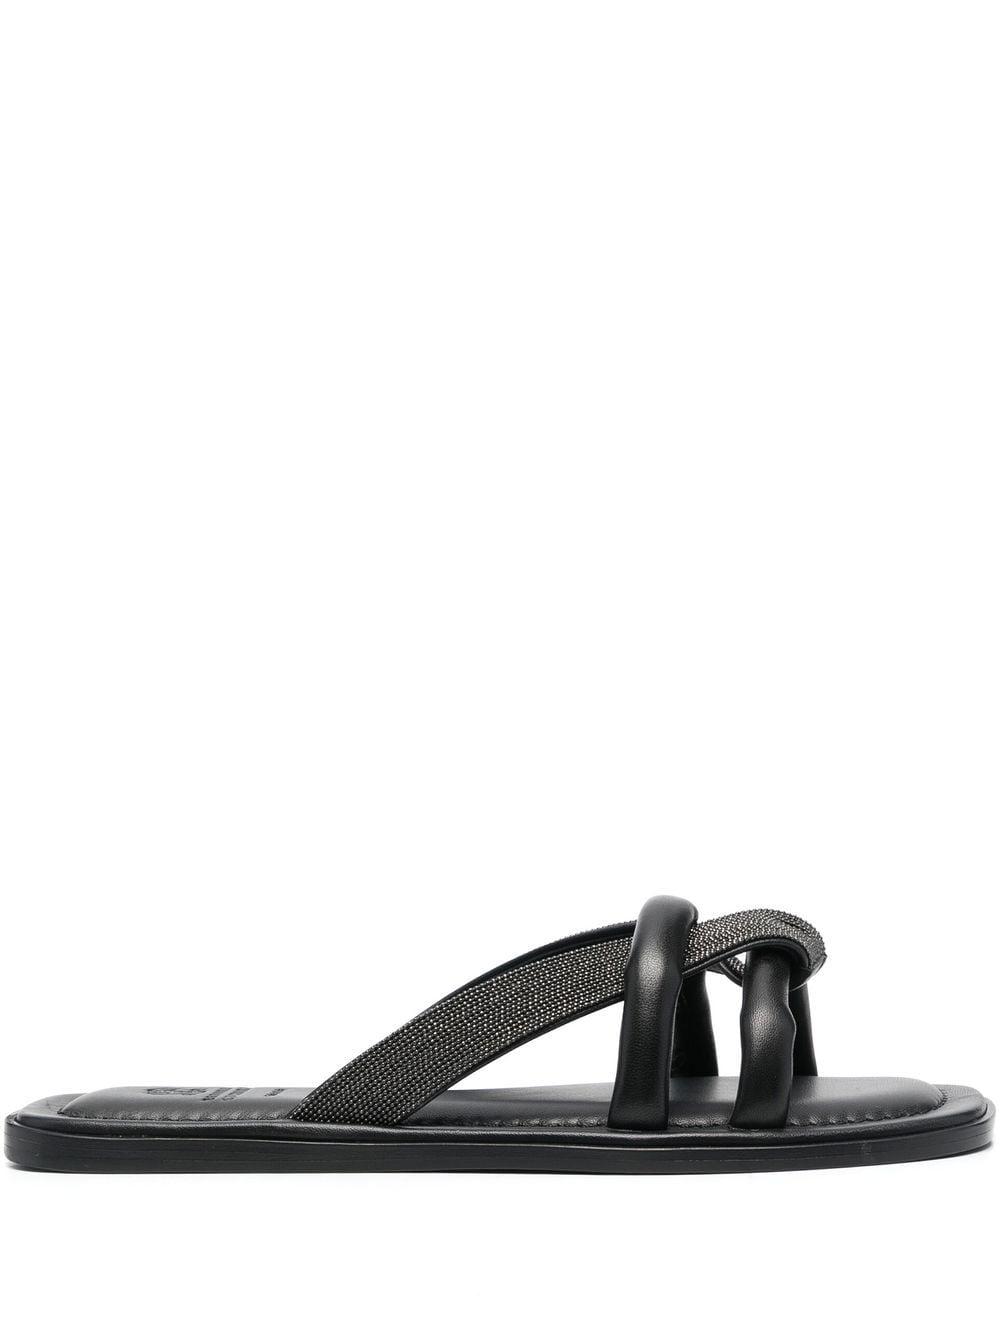 Brunello Cucinelli Rhinestone-embellished Leather Sandals in Black | Lyst